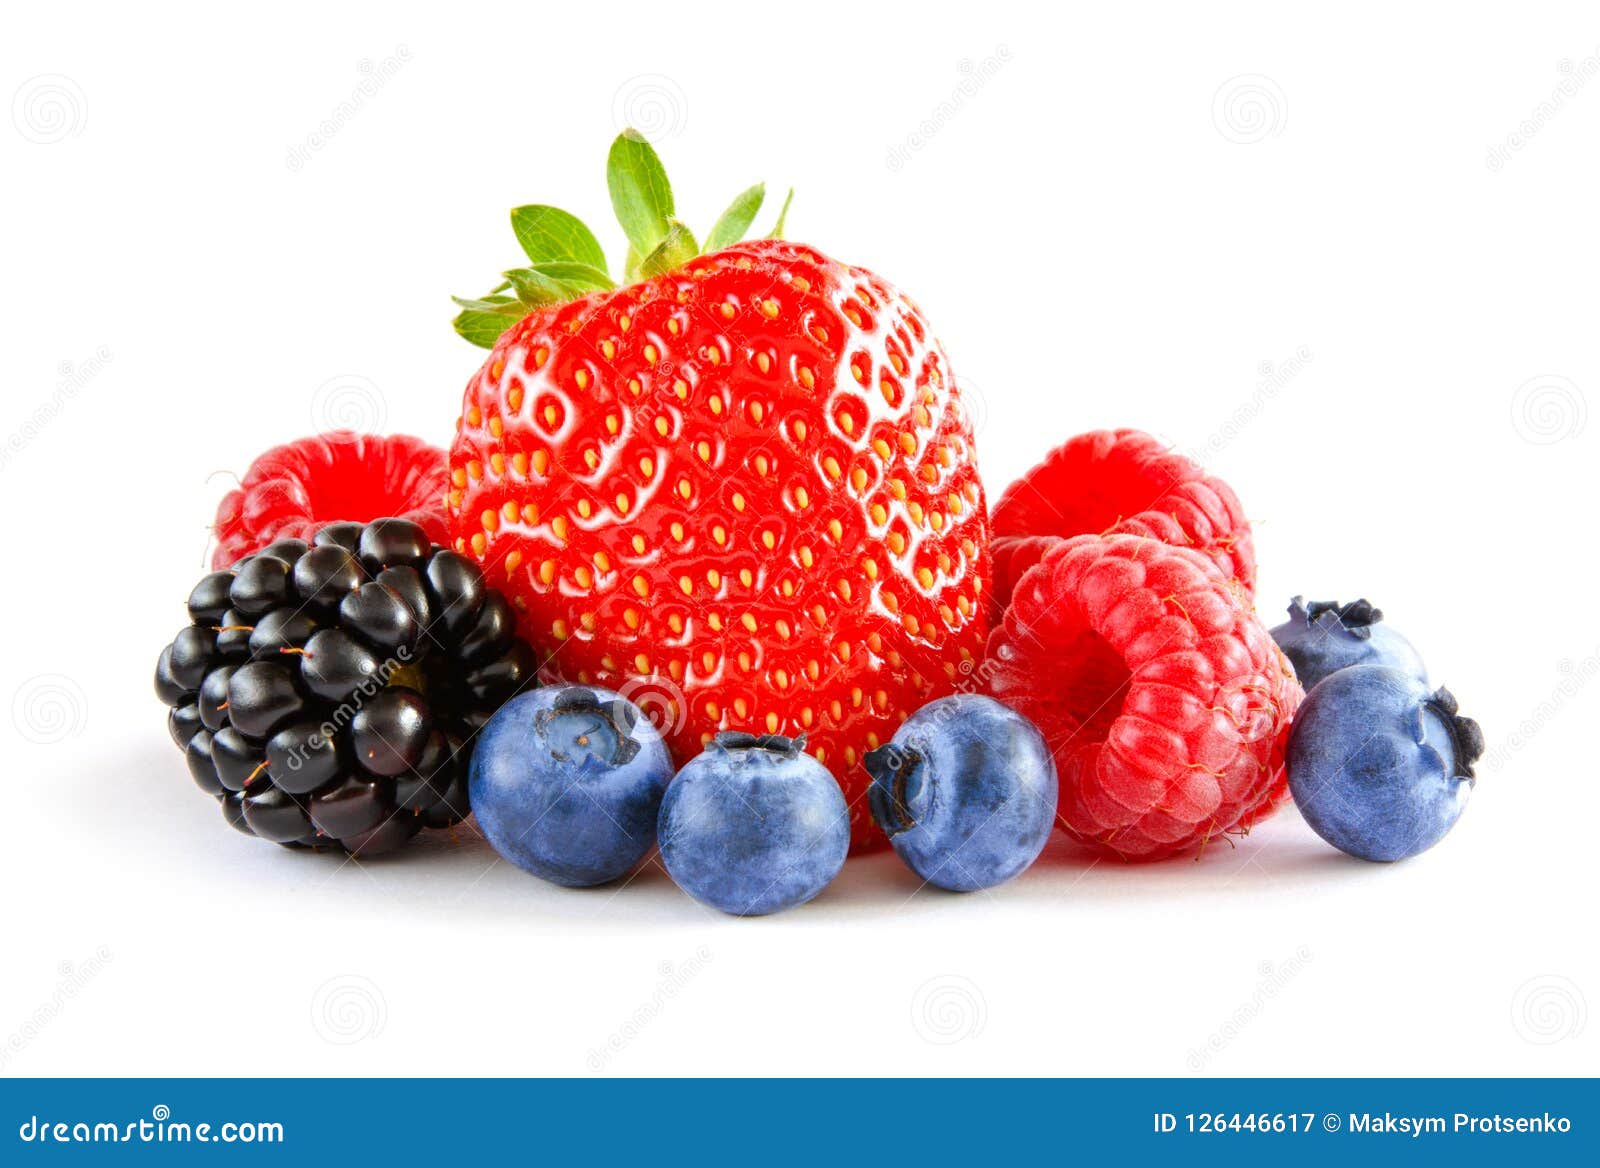 fresh sweet berries on the white background. ripe juicy strawberry, raspberry, blueberry, blackberry